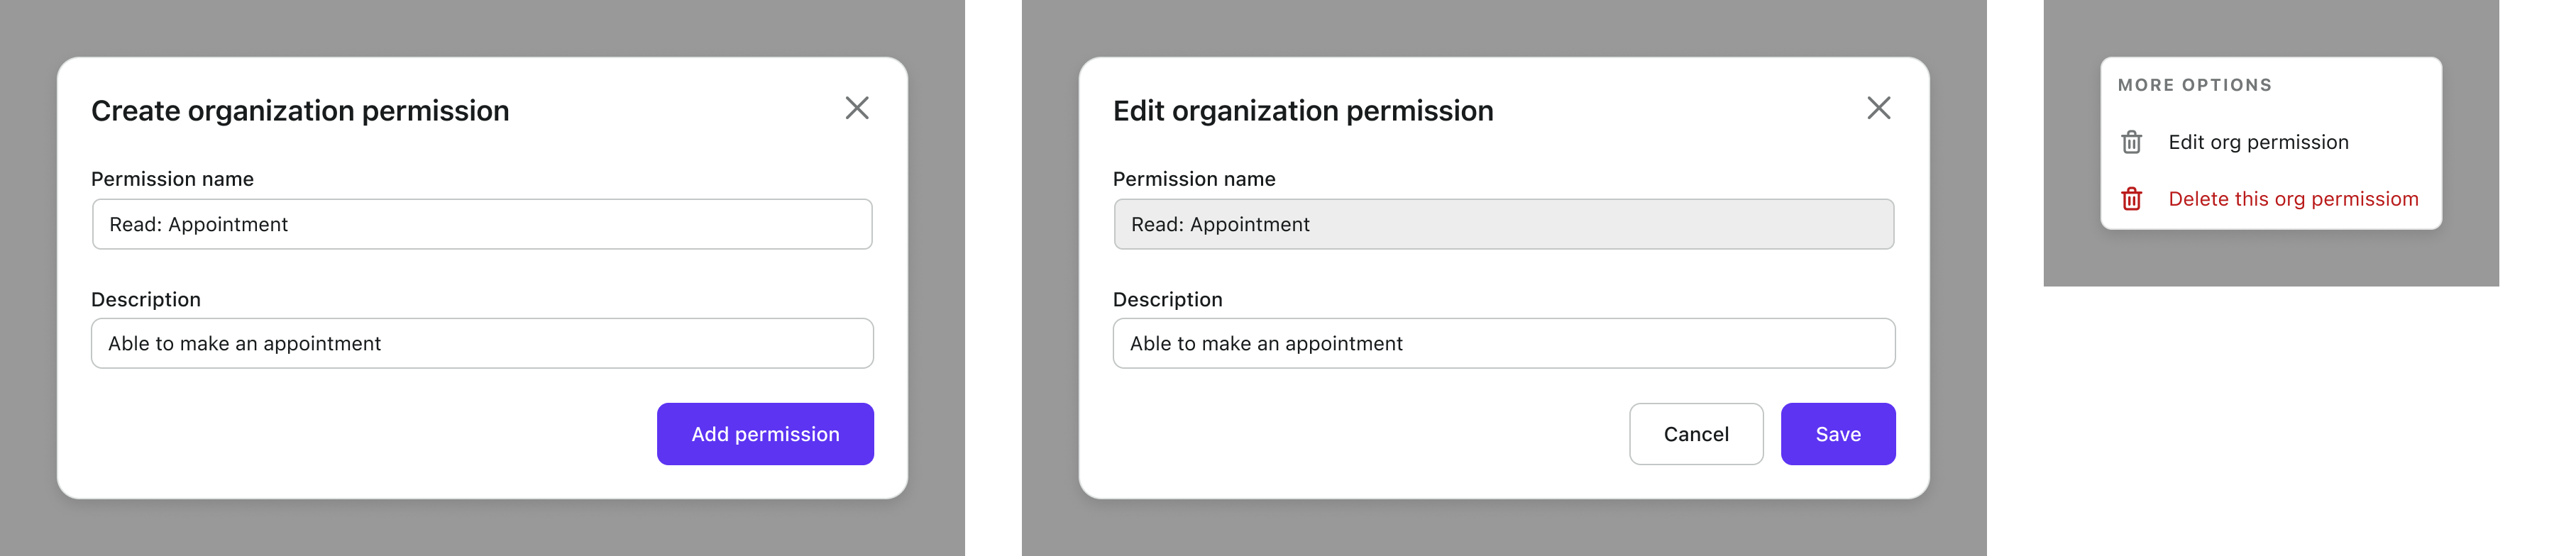 Organization create permission